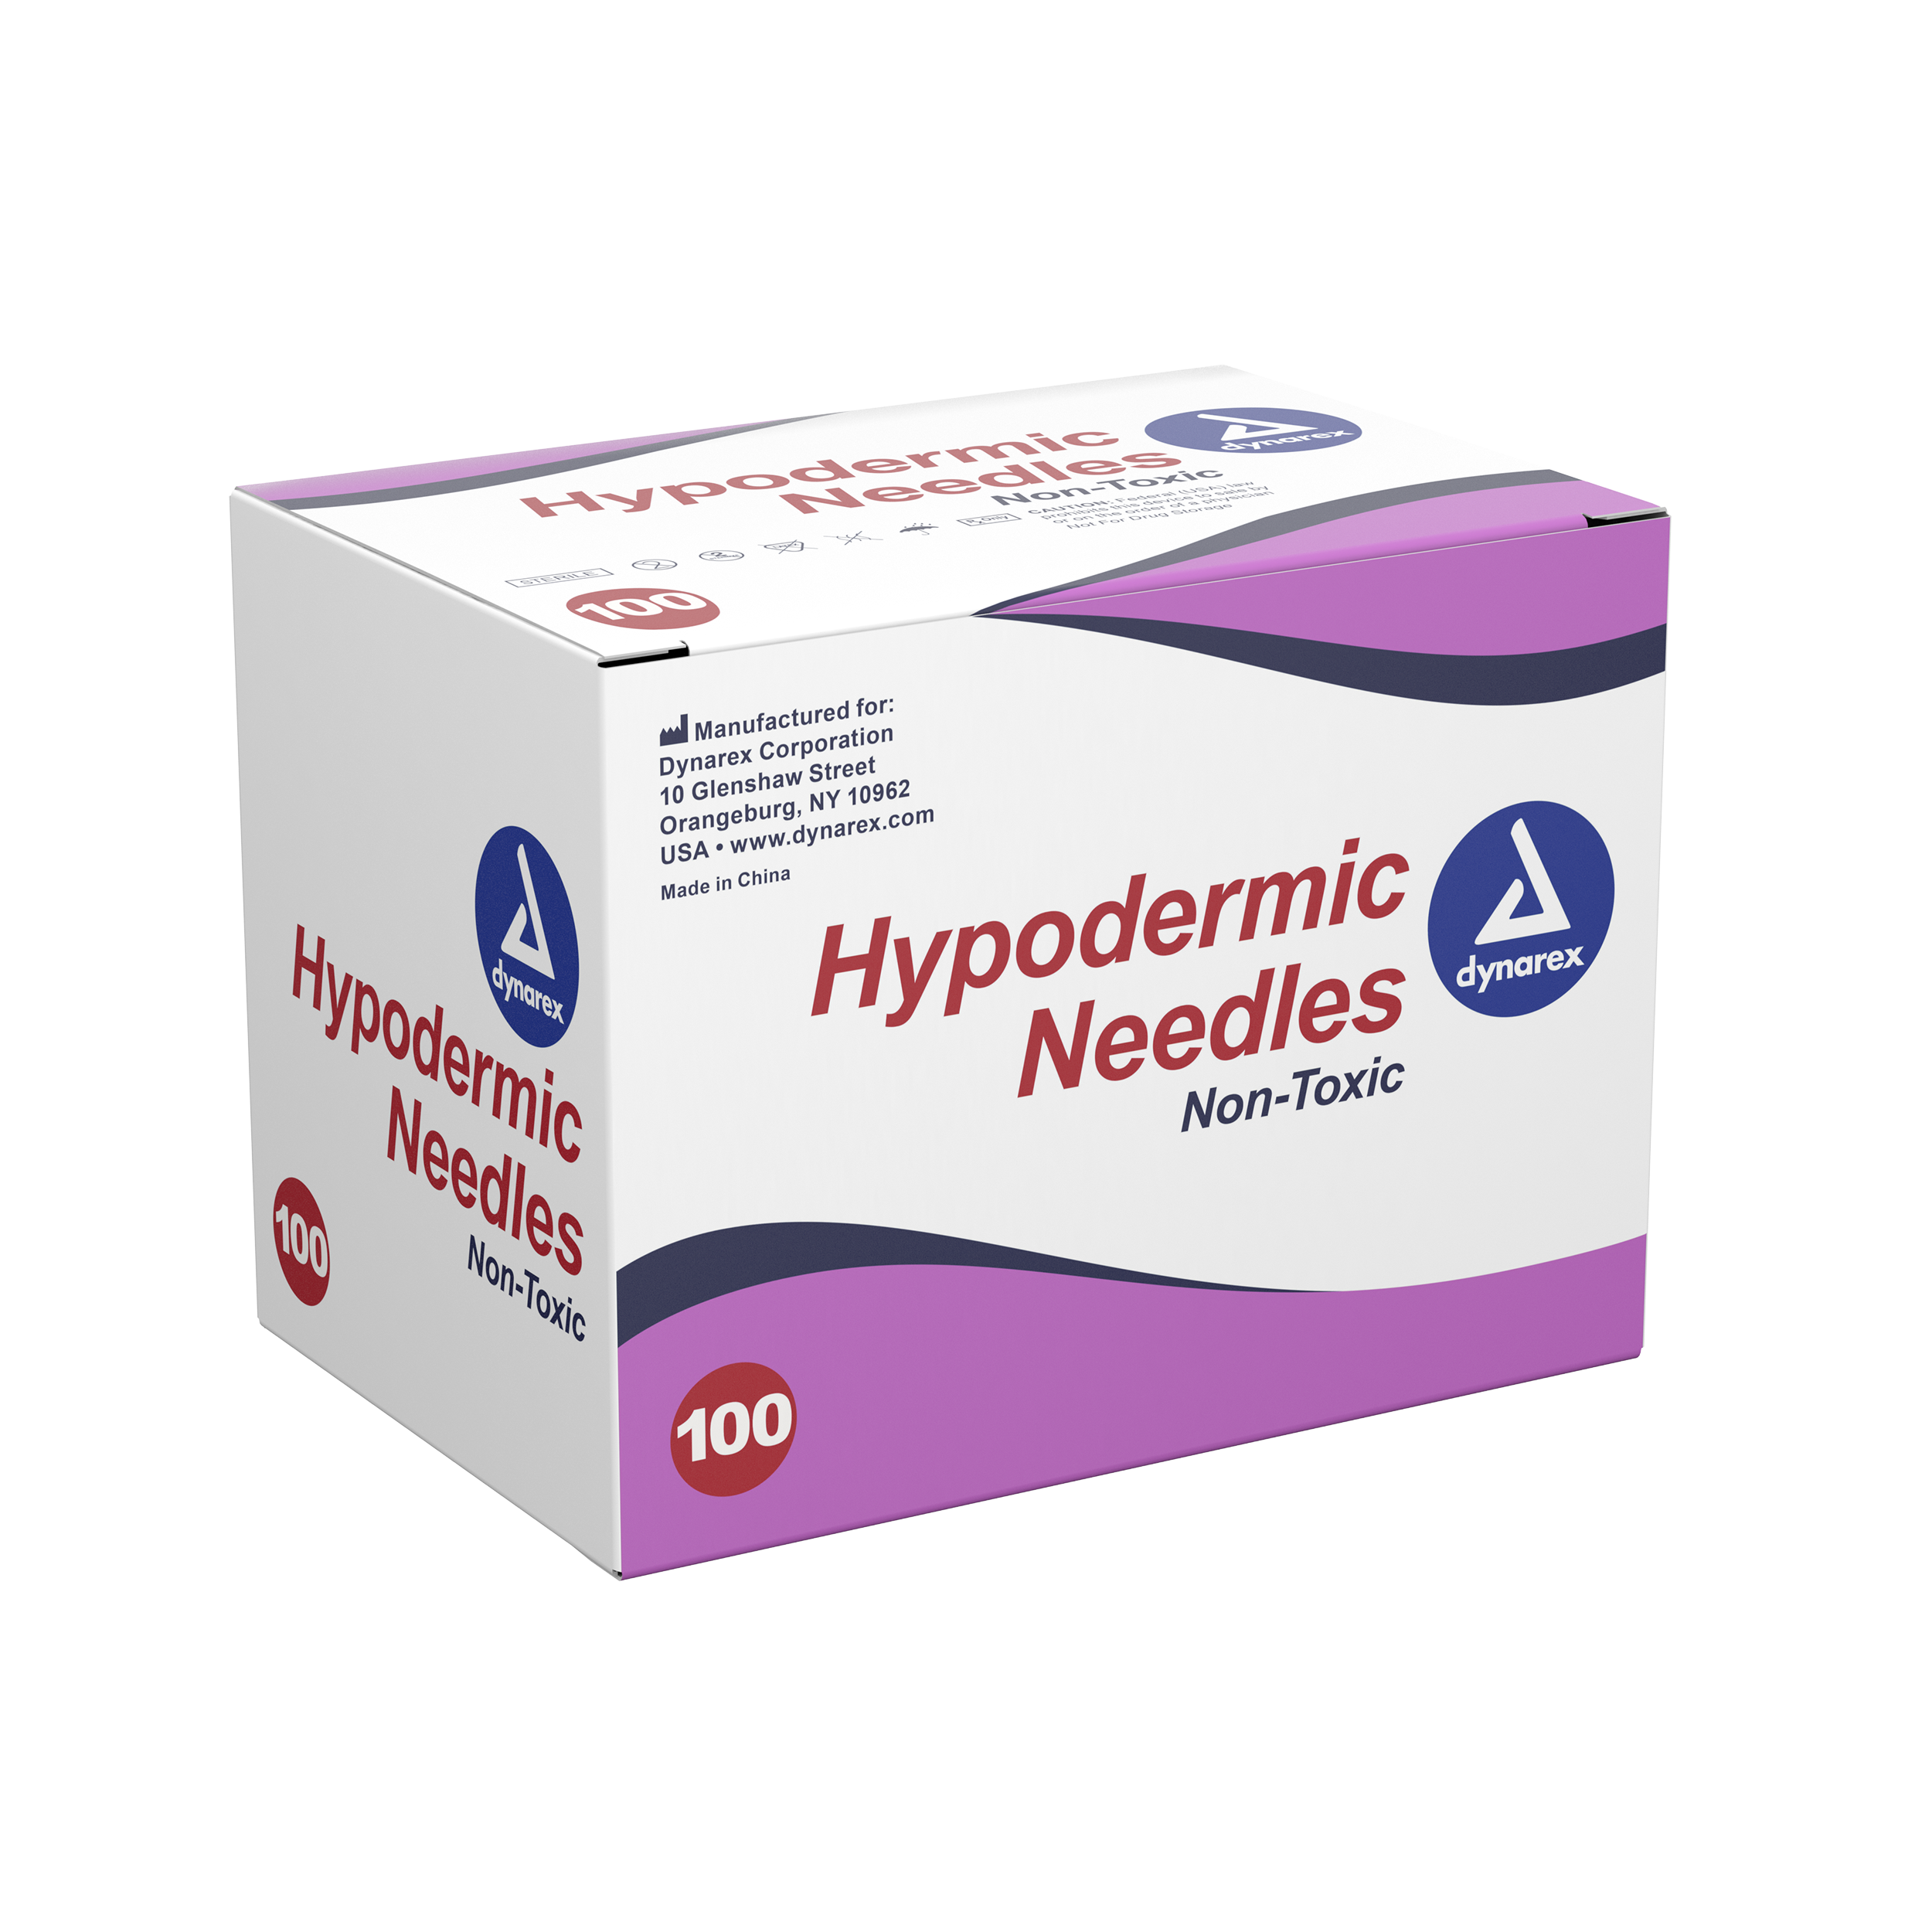 Hypodermic NeedlesLOW Price, Stock up today!